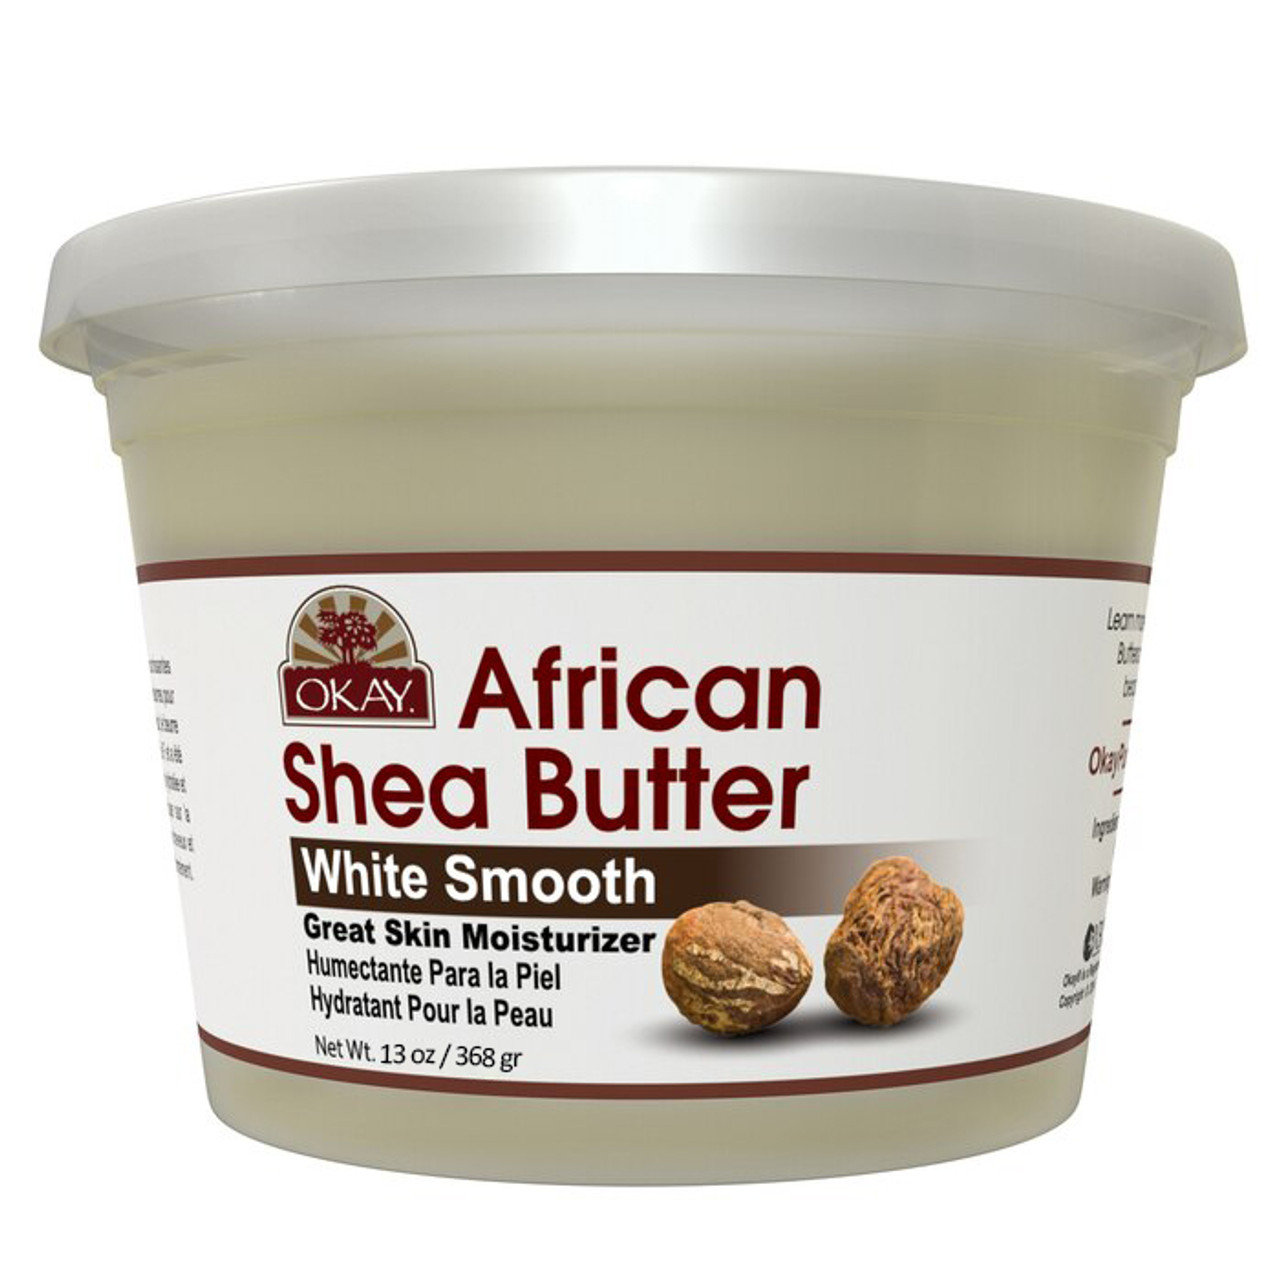 OKAY African Shea Butter